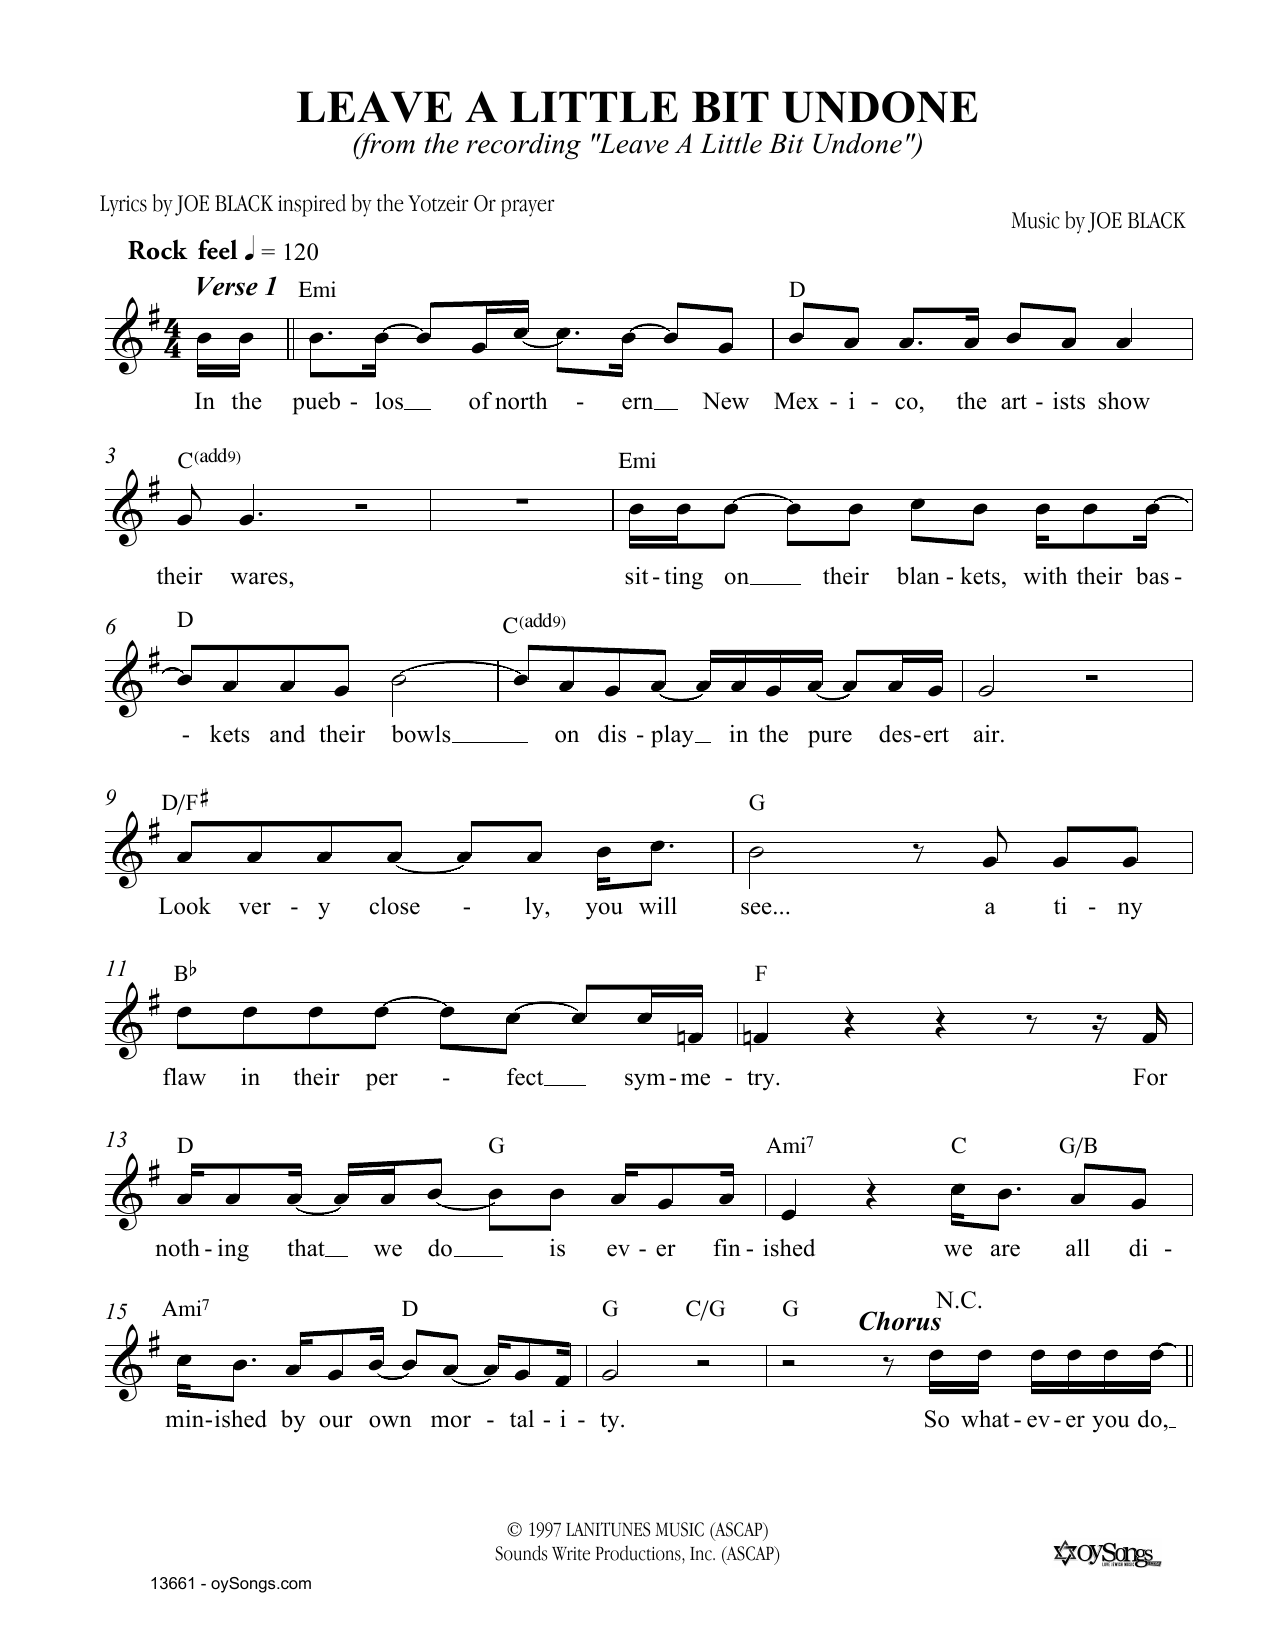 Joe Black Leave A Little Bit Undone Sheet Music Notes & Chords for Melody Line, Lyrics & Chords - Download or Print PDF